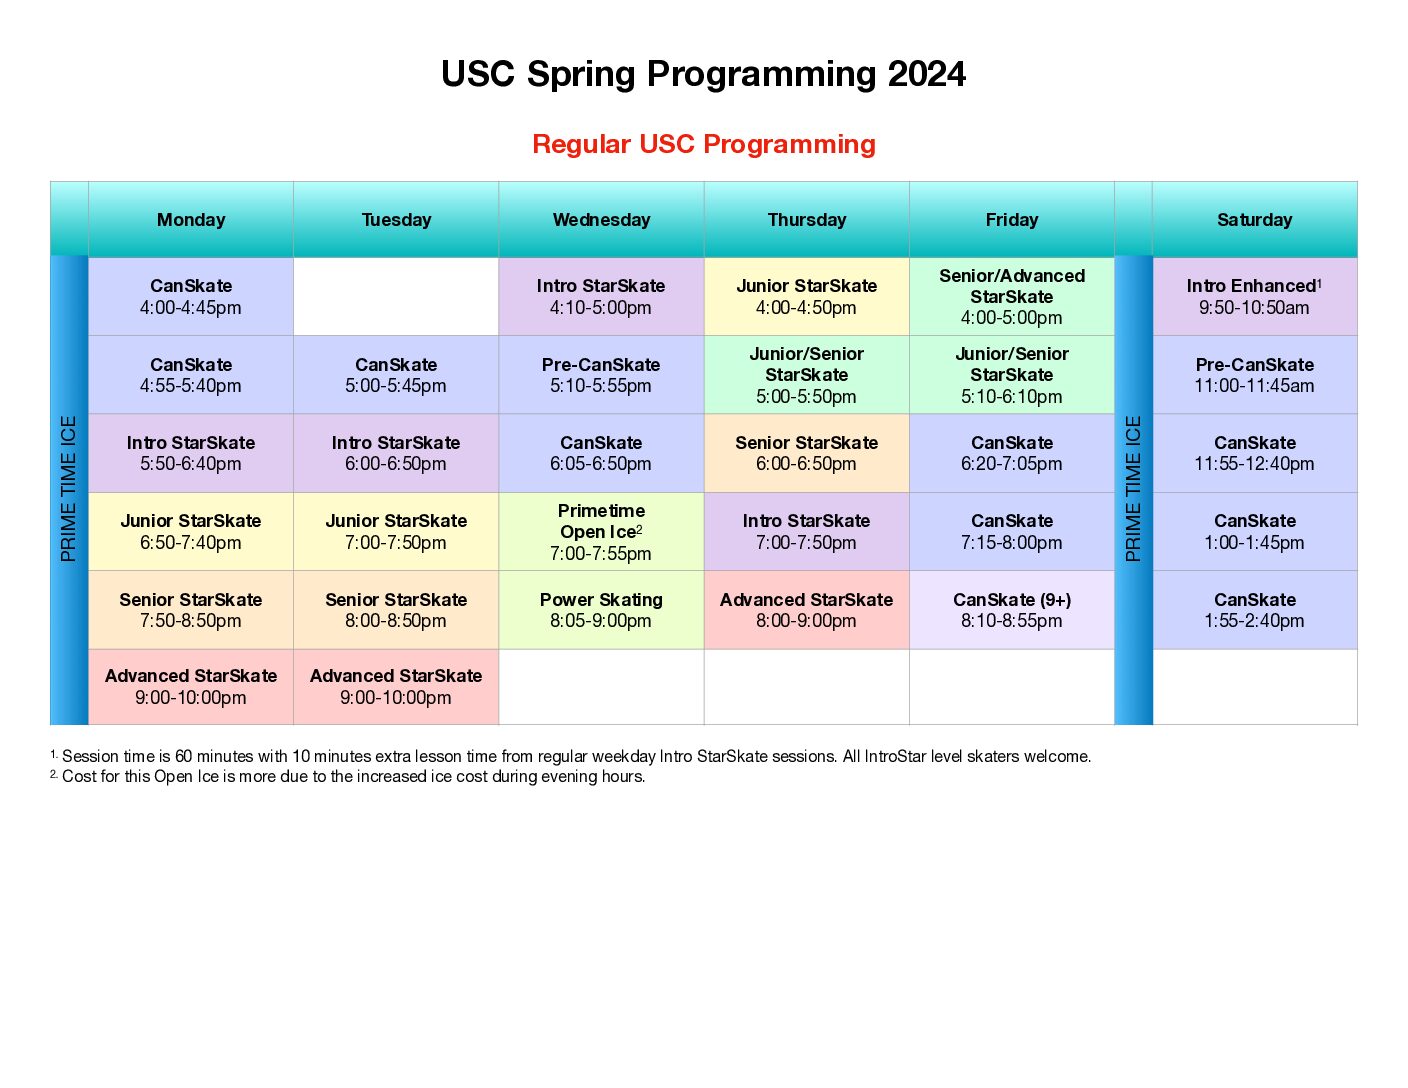 USC 2024 Spring Programming